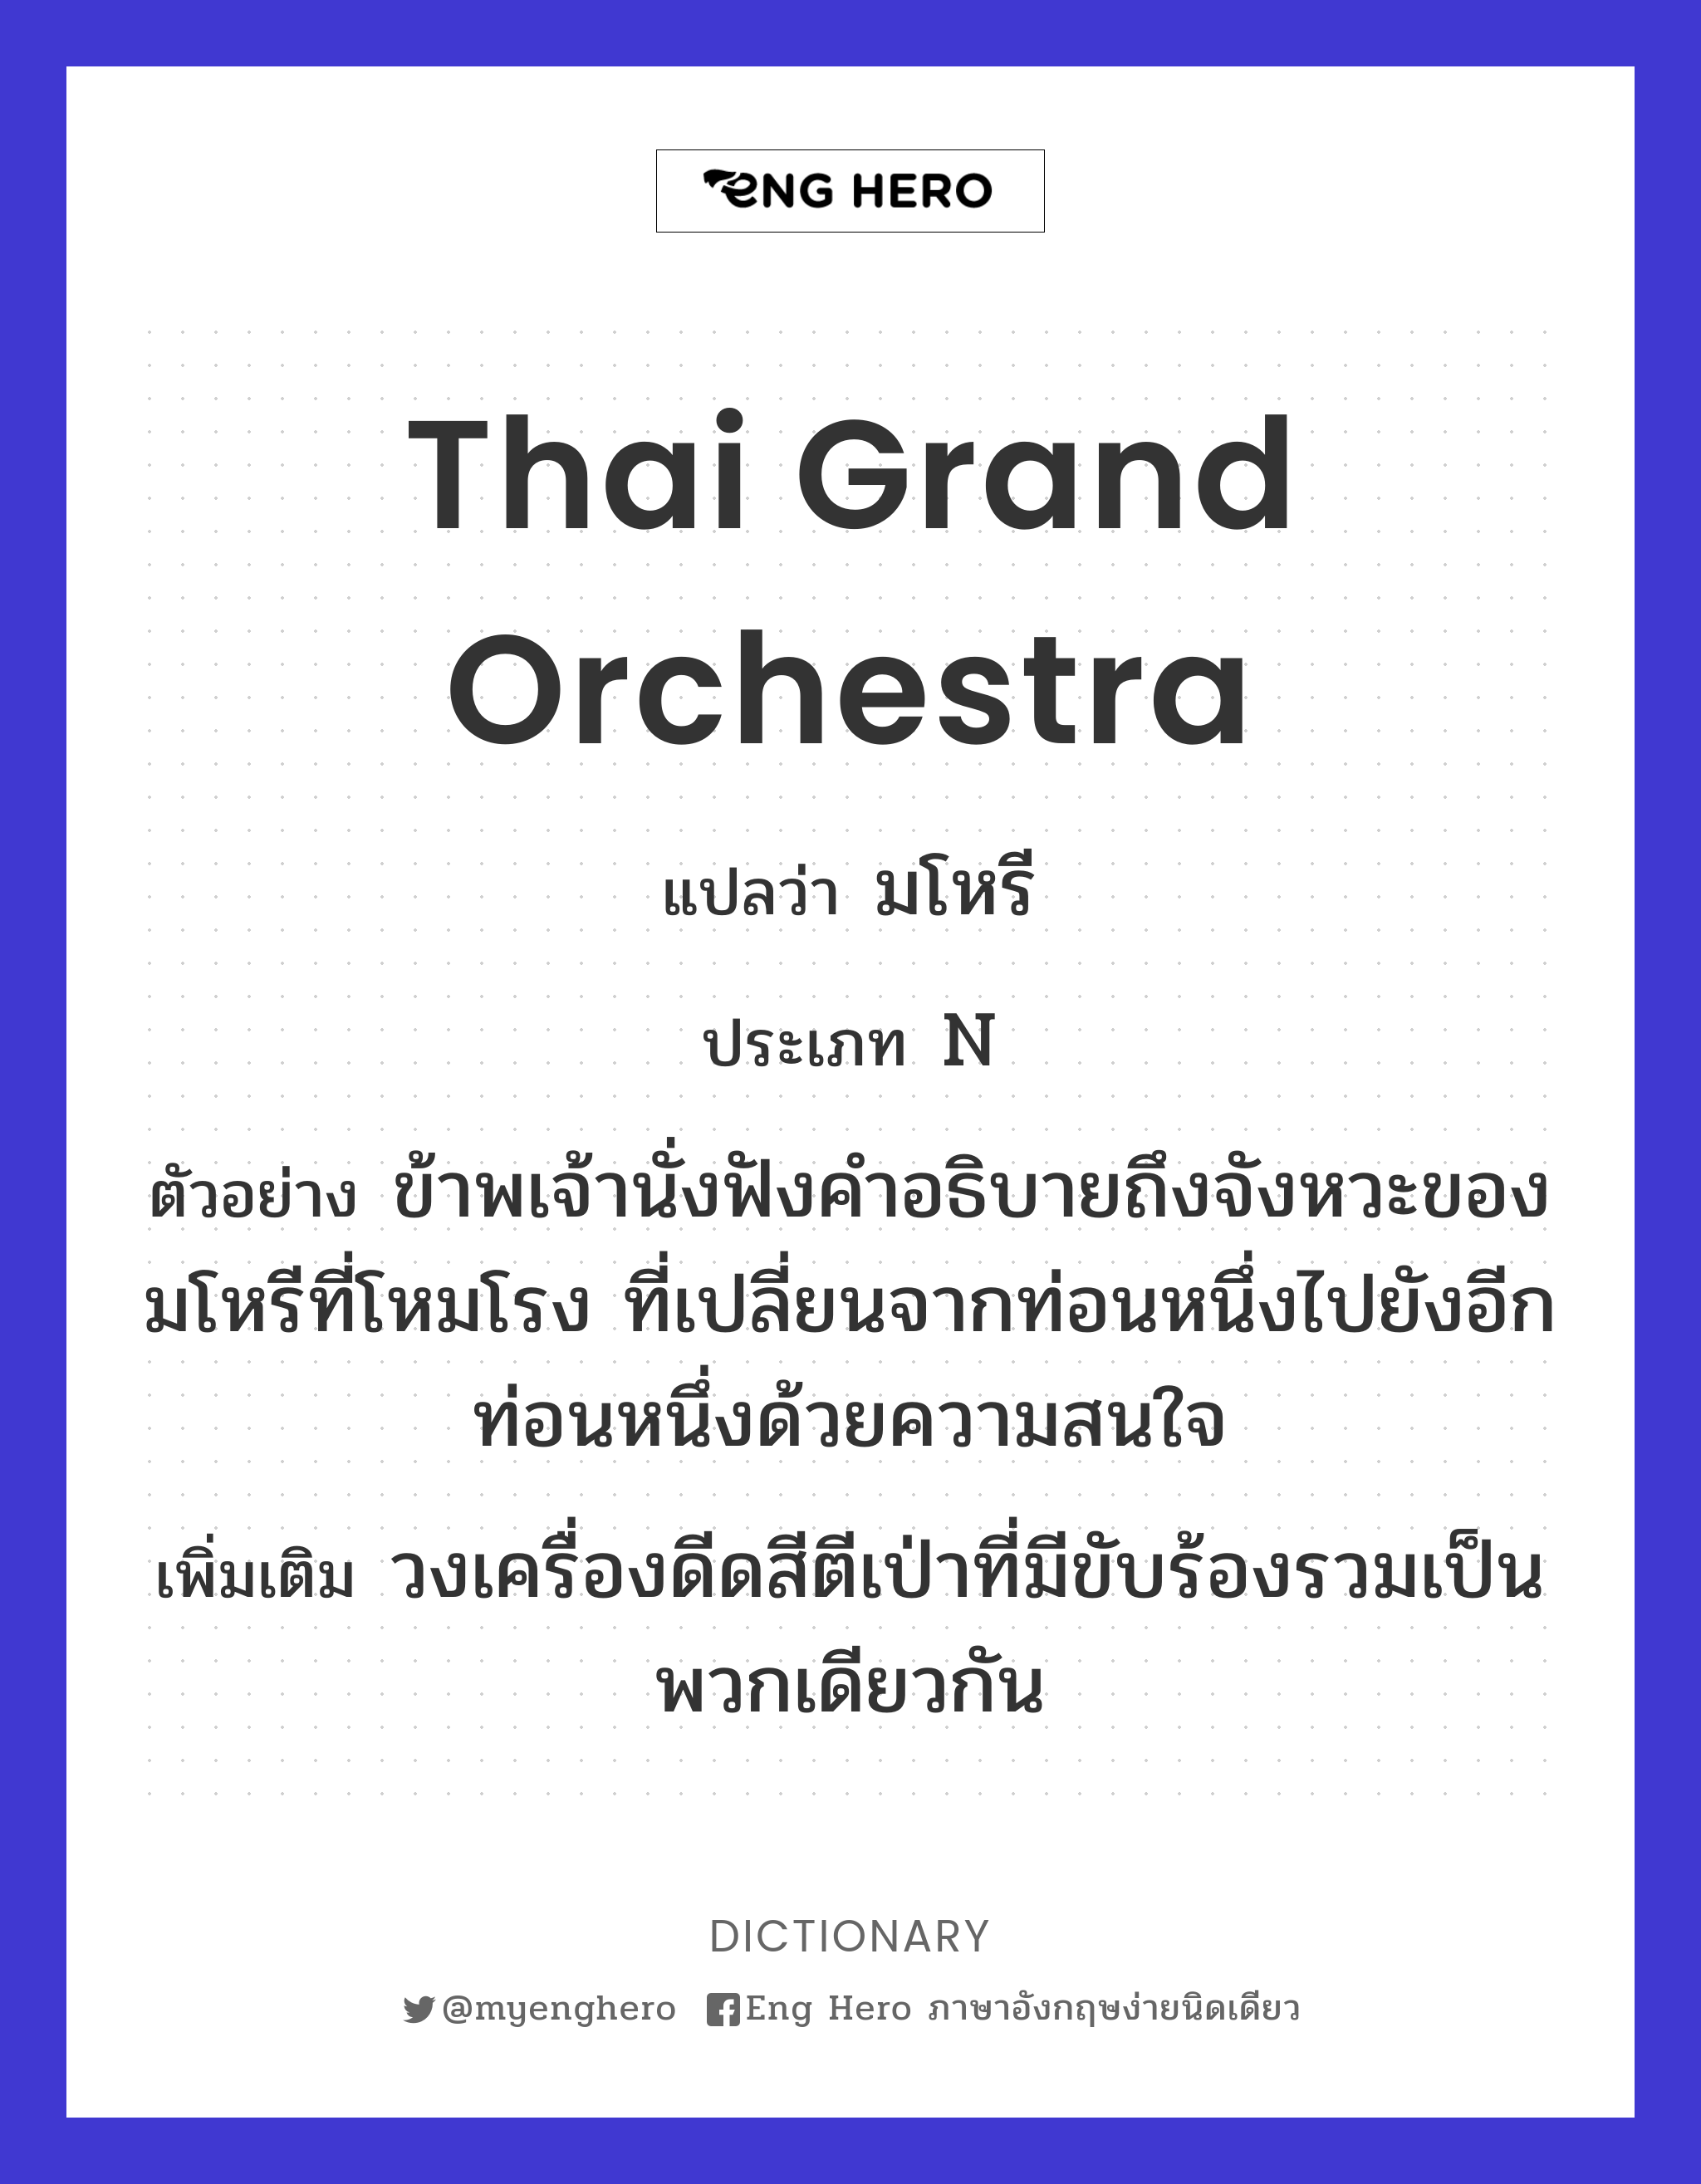 Thai grand orchestra